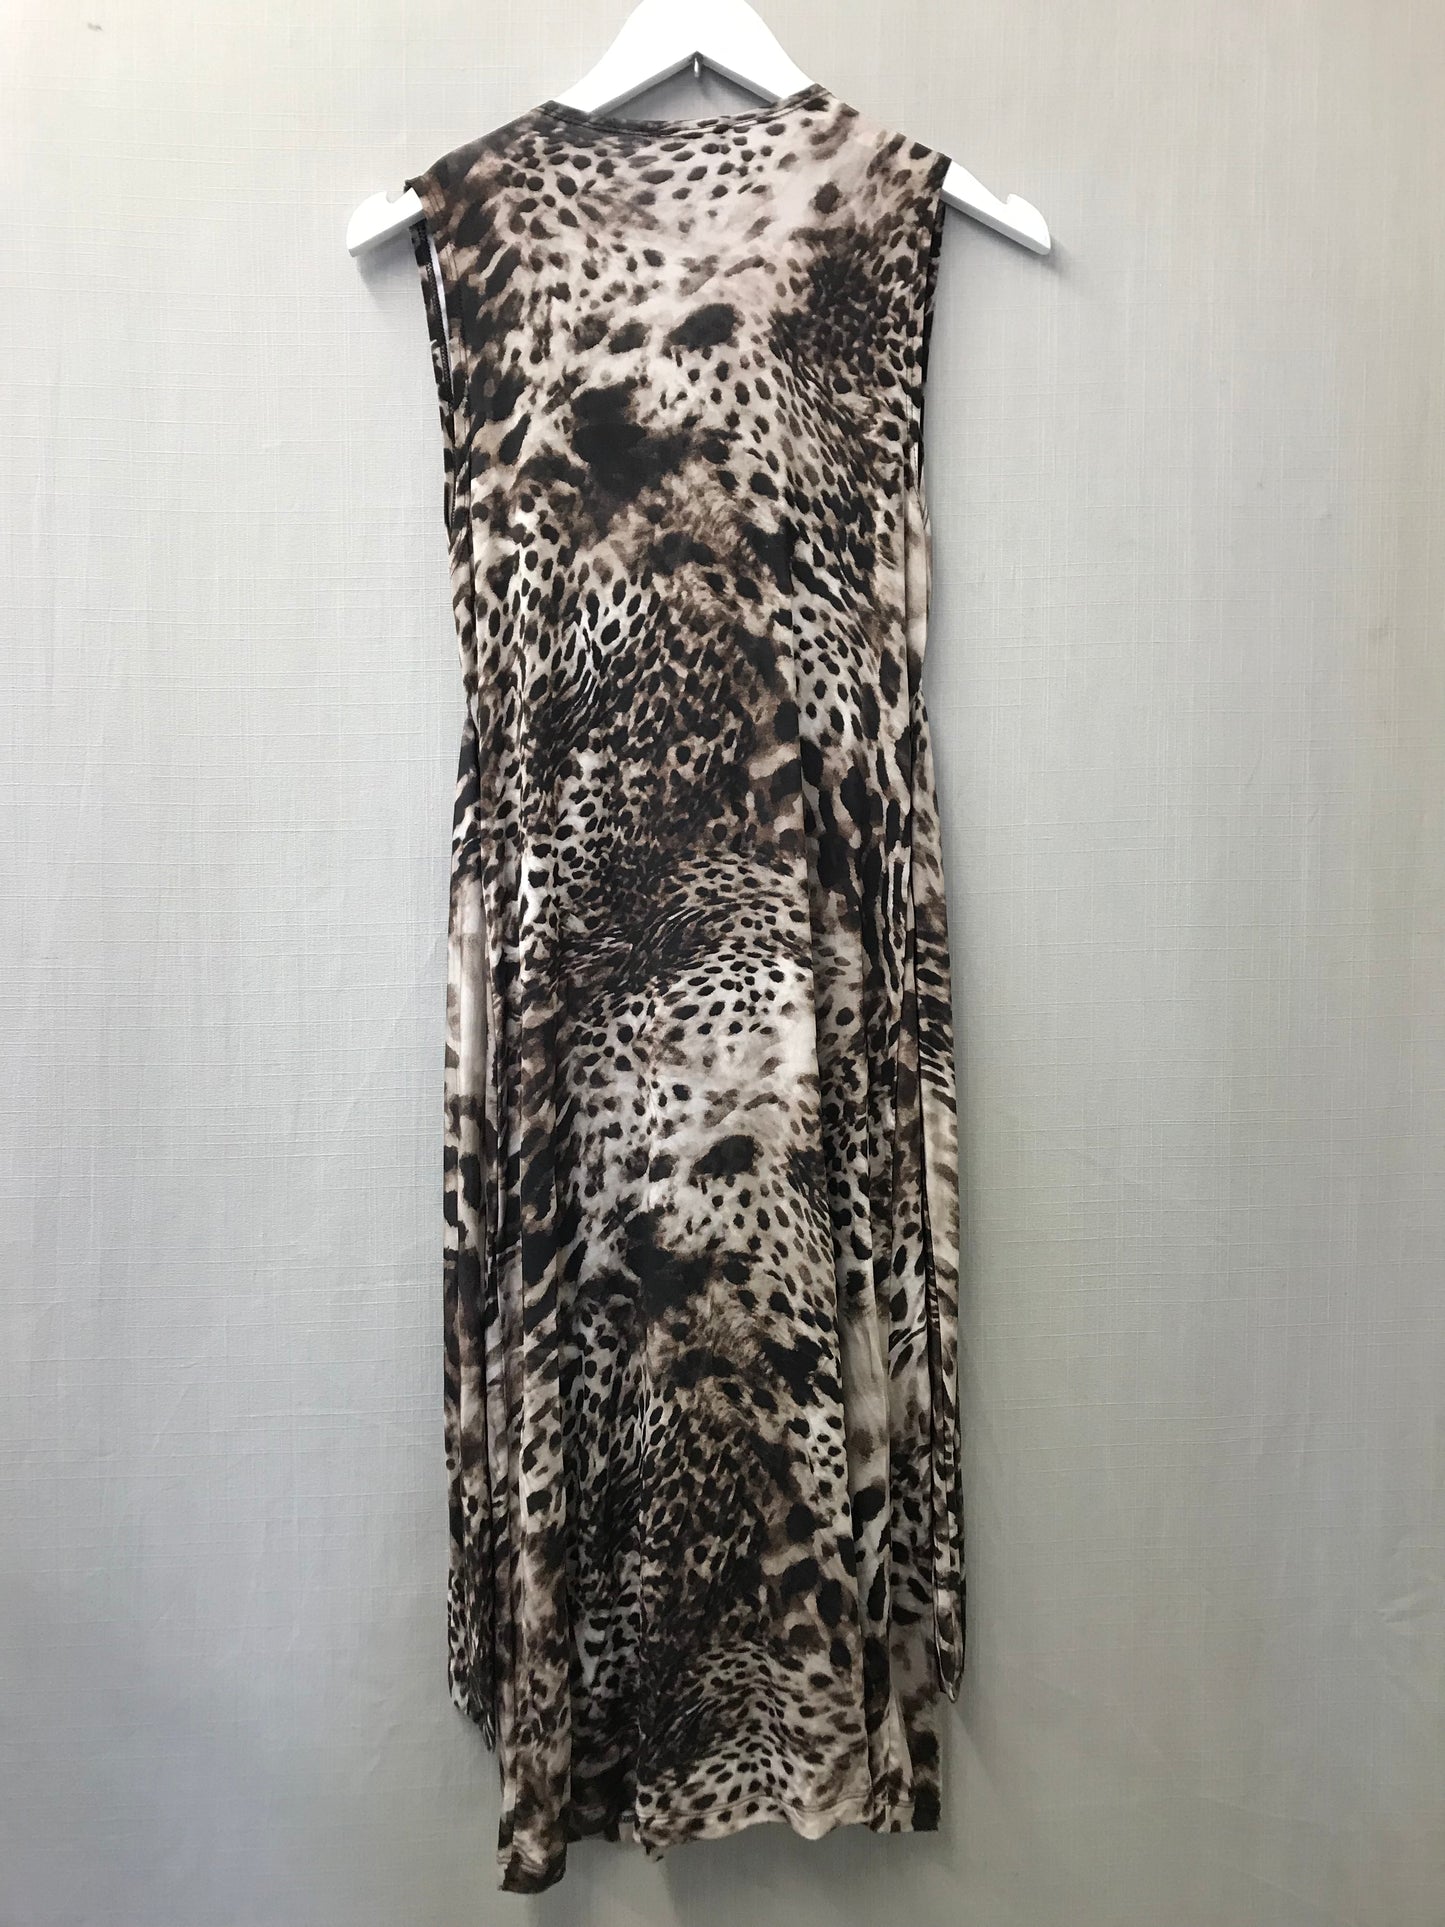 River Island Animal Leopard Print Dress Size S/M BNWT